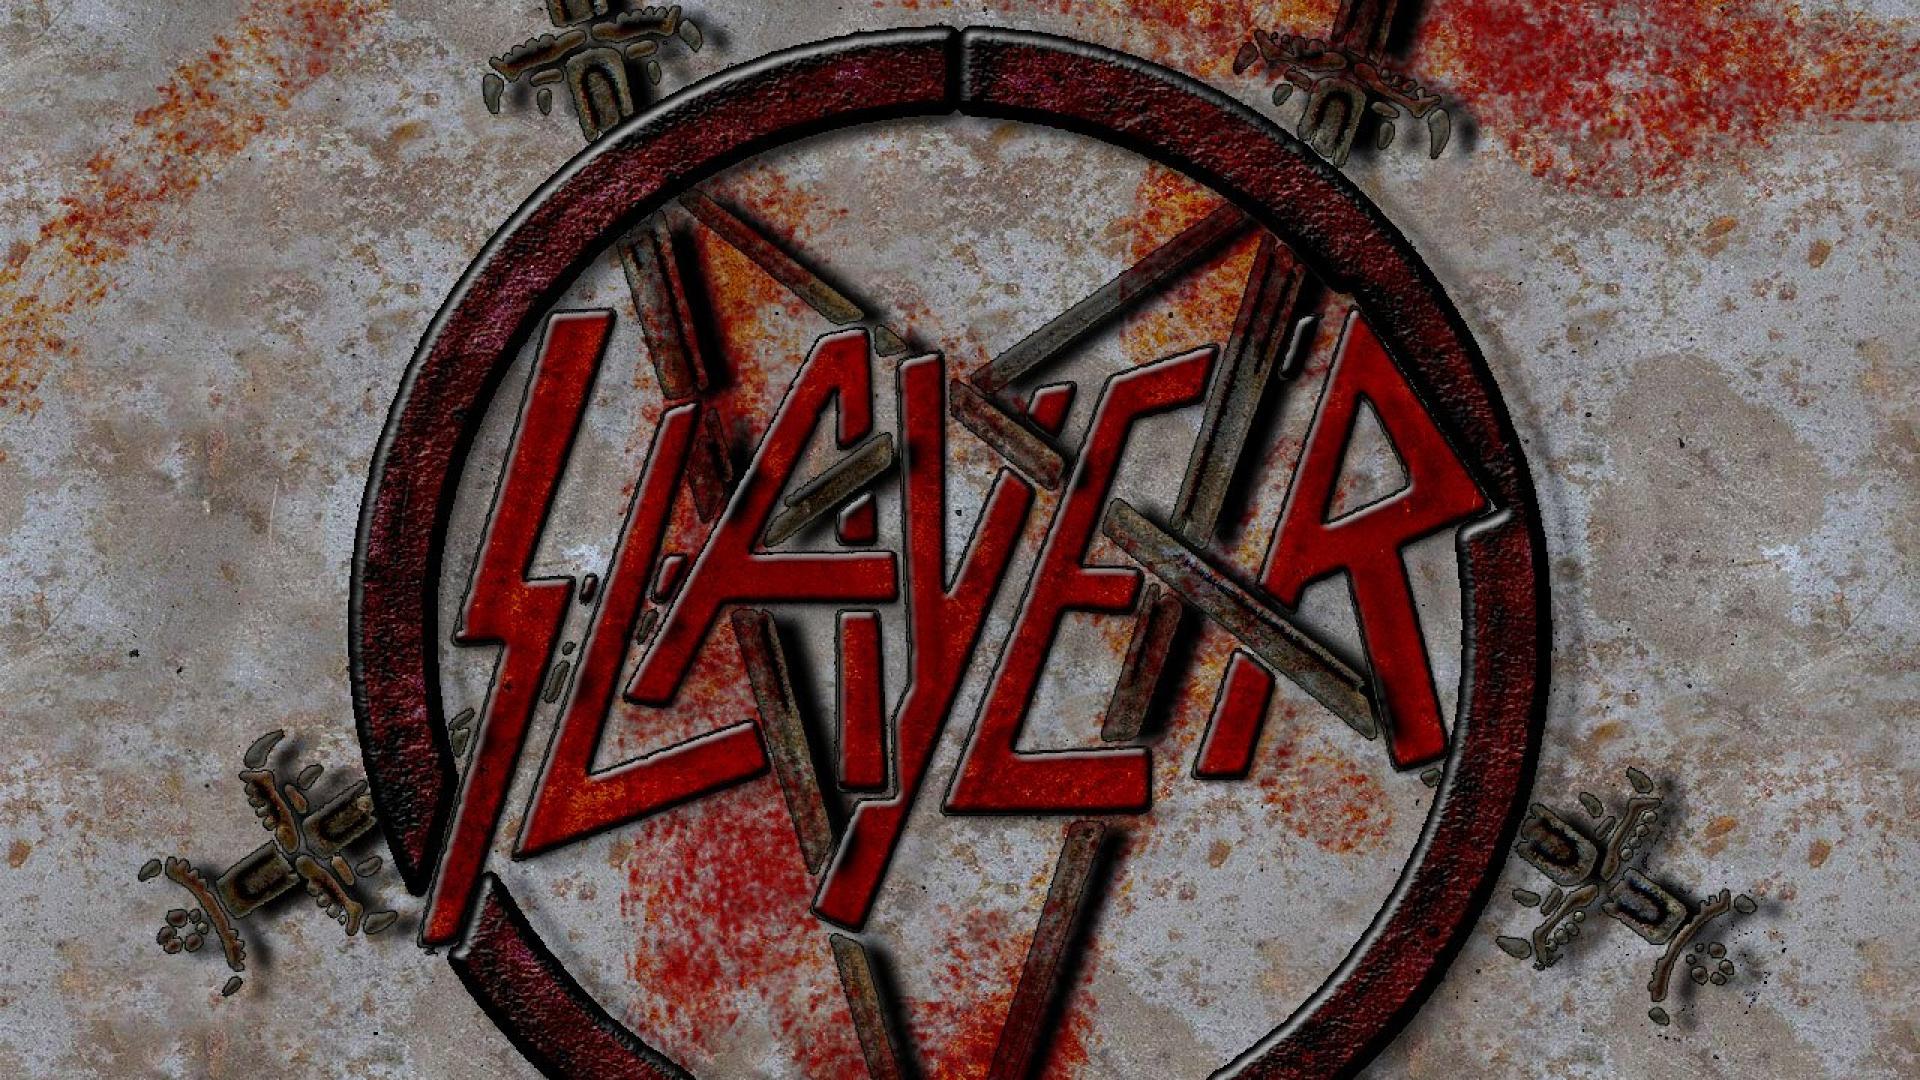 Slayer wallpaper 1280x960 HQ WALLPAPER   42495